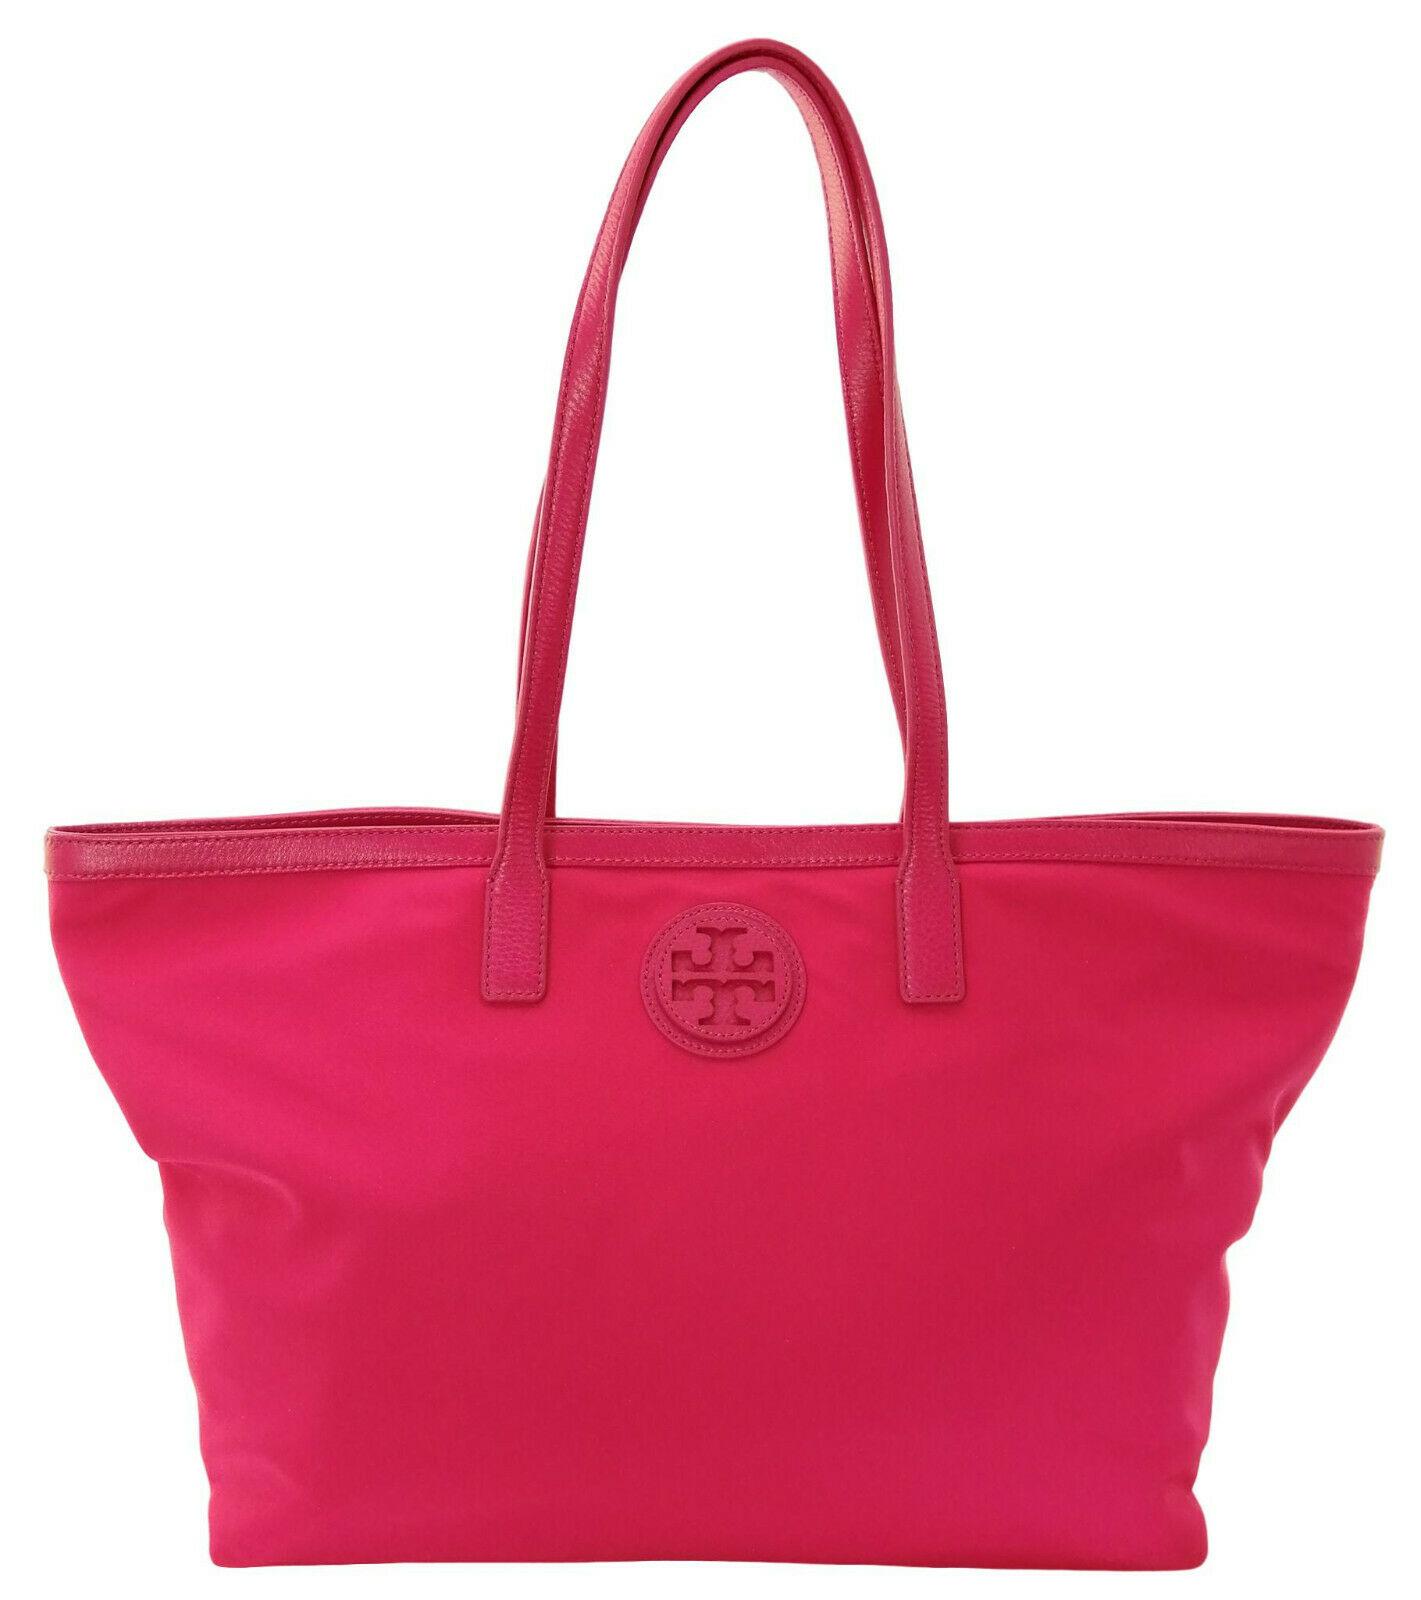 Tory Burch Tote Bag Carnation Red Pink Nylon Medium to Large Dena Handbag